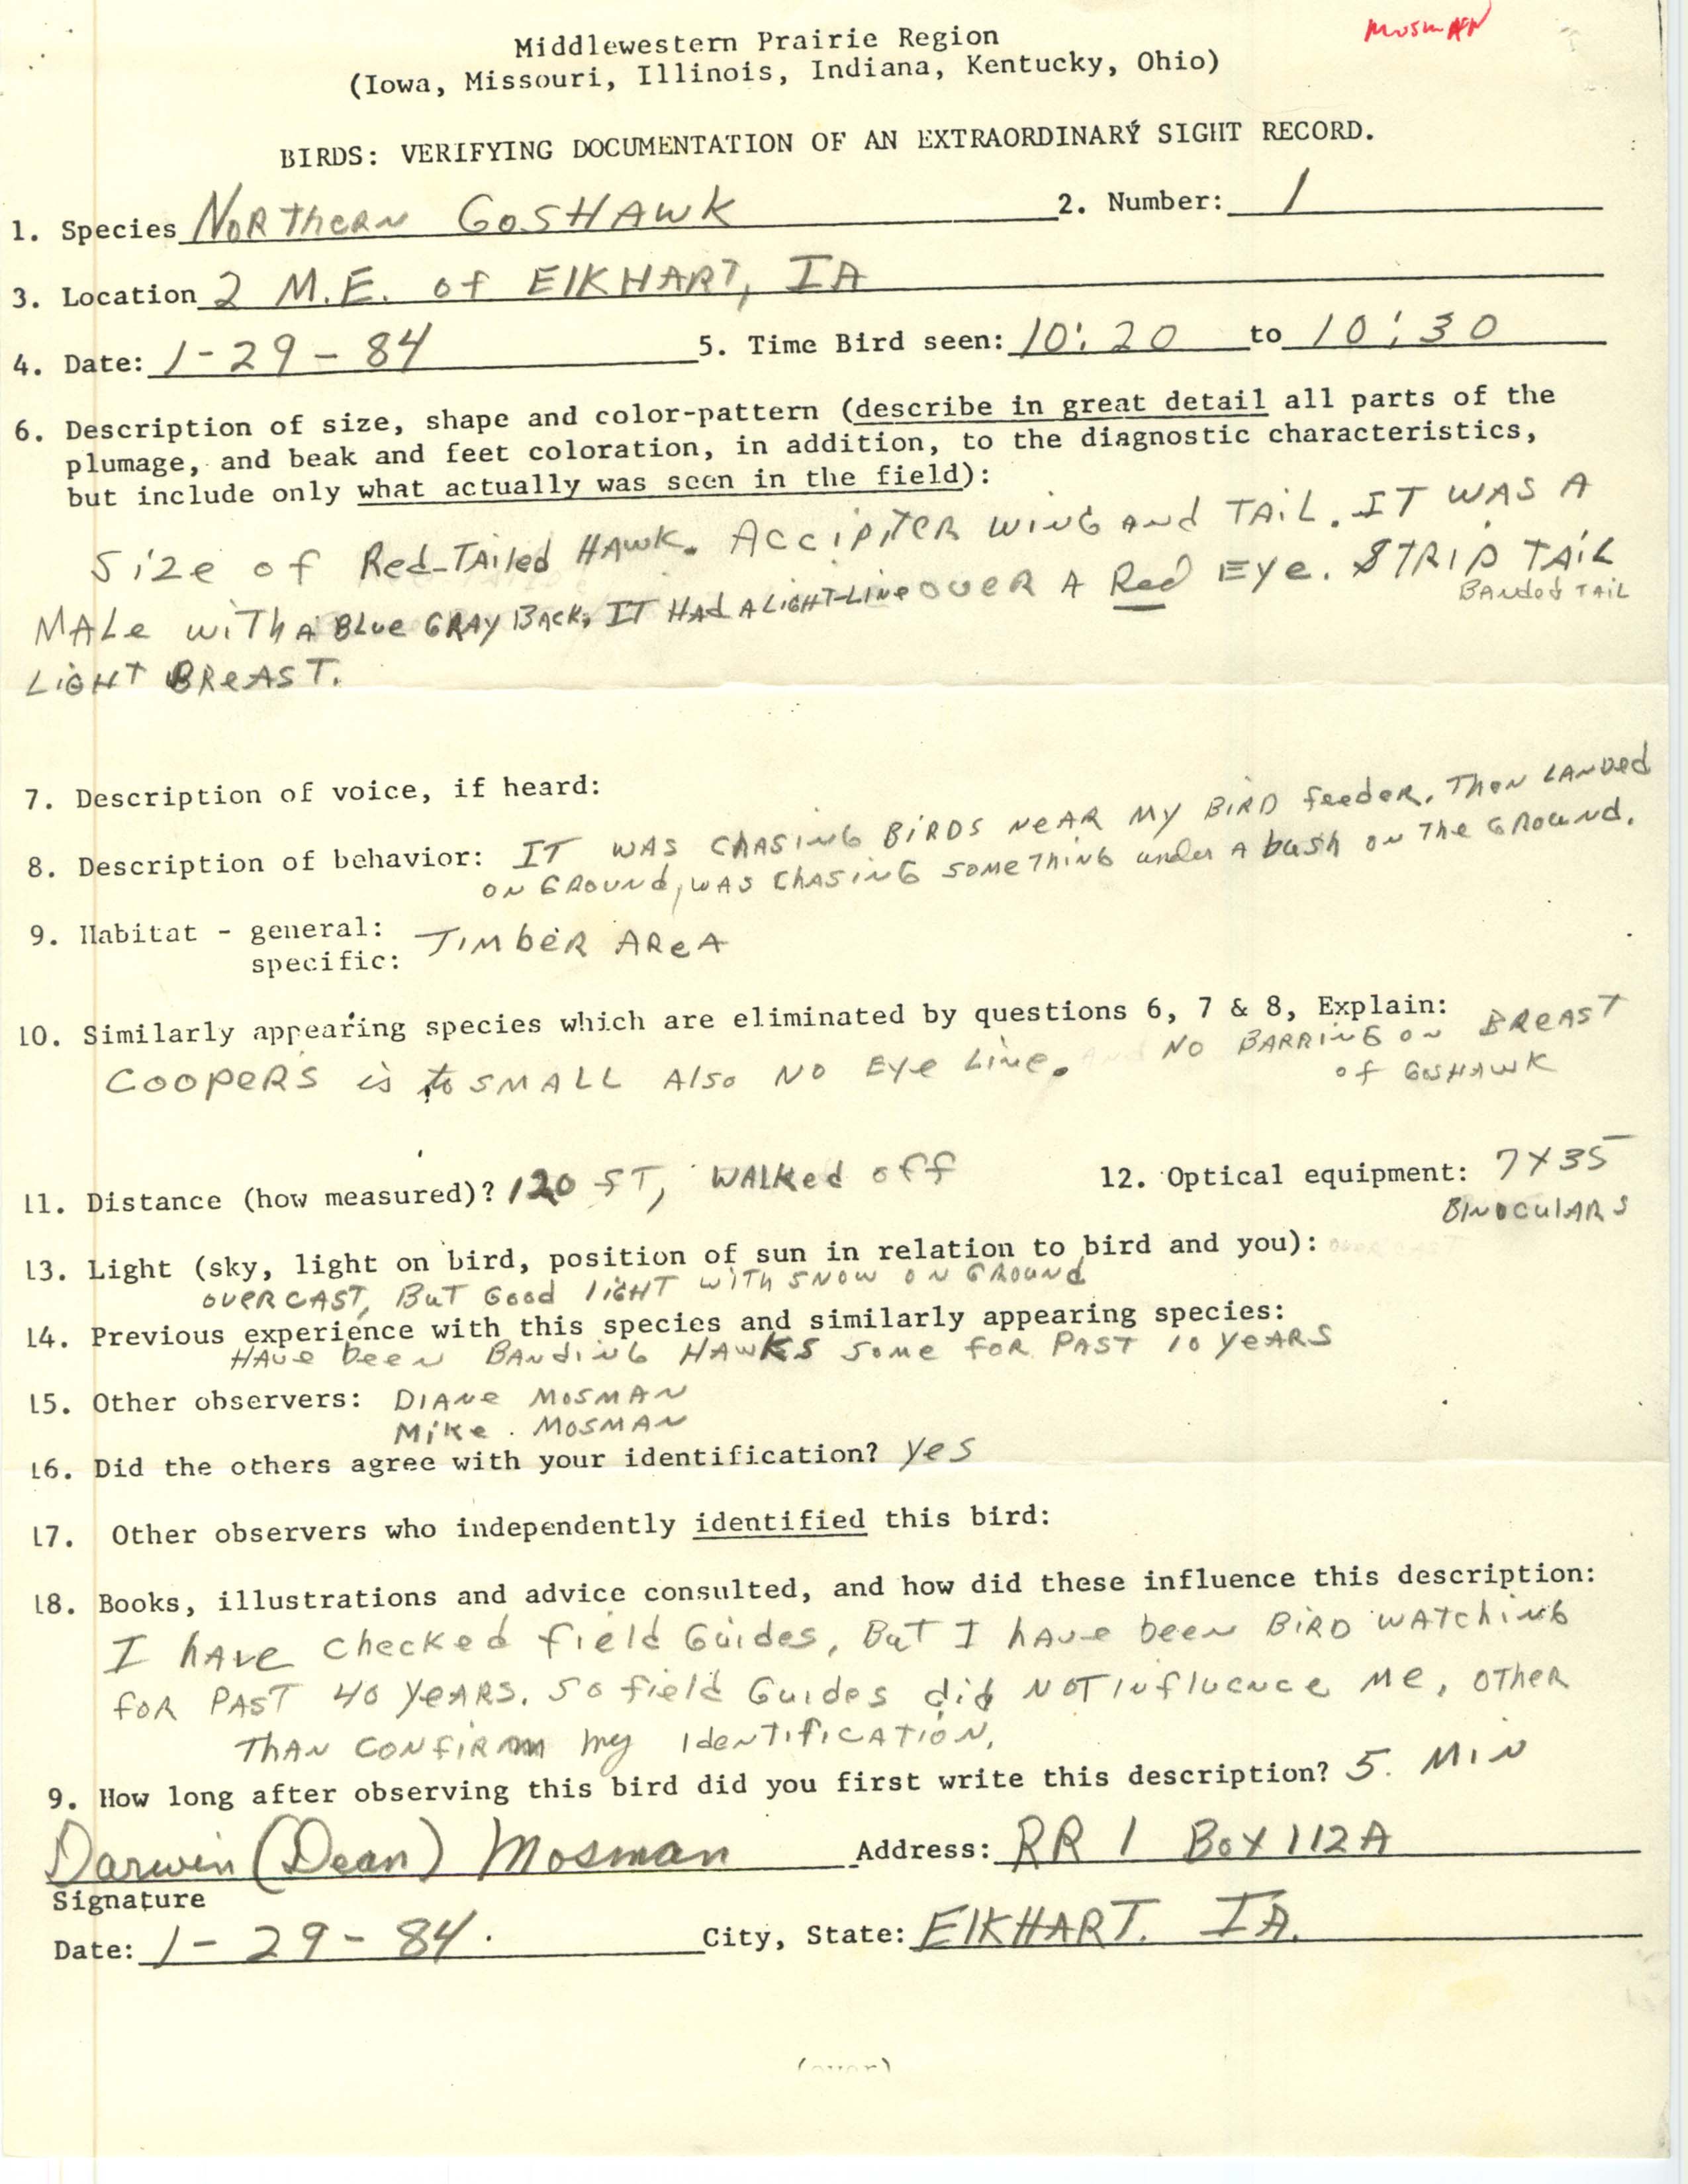 Rare bird documentation form for Northern Goshawk at Elkhart, 1984